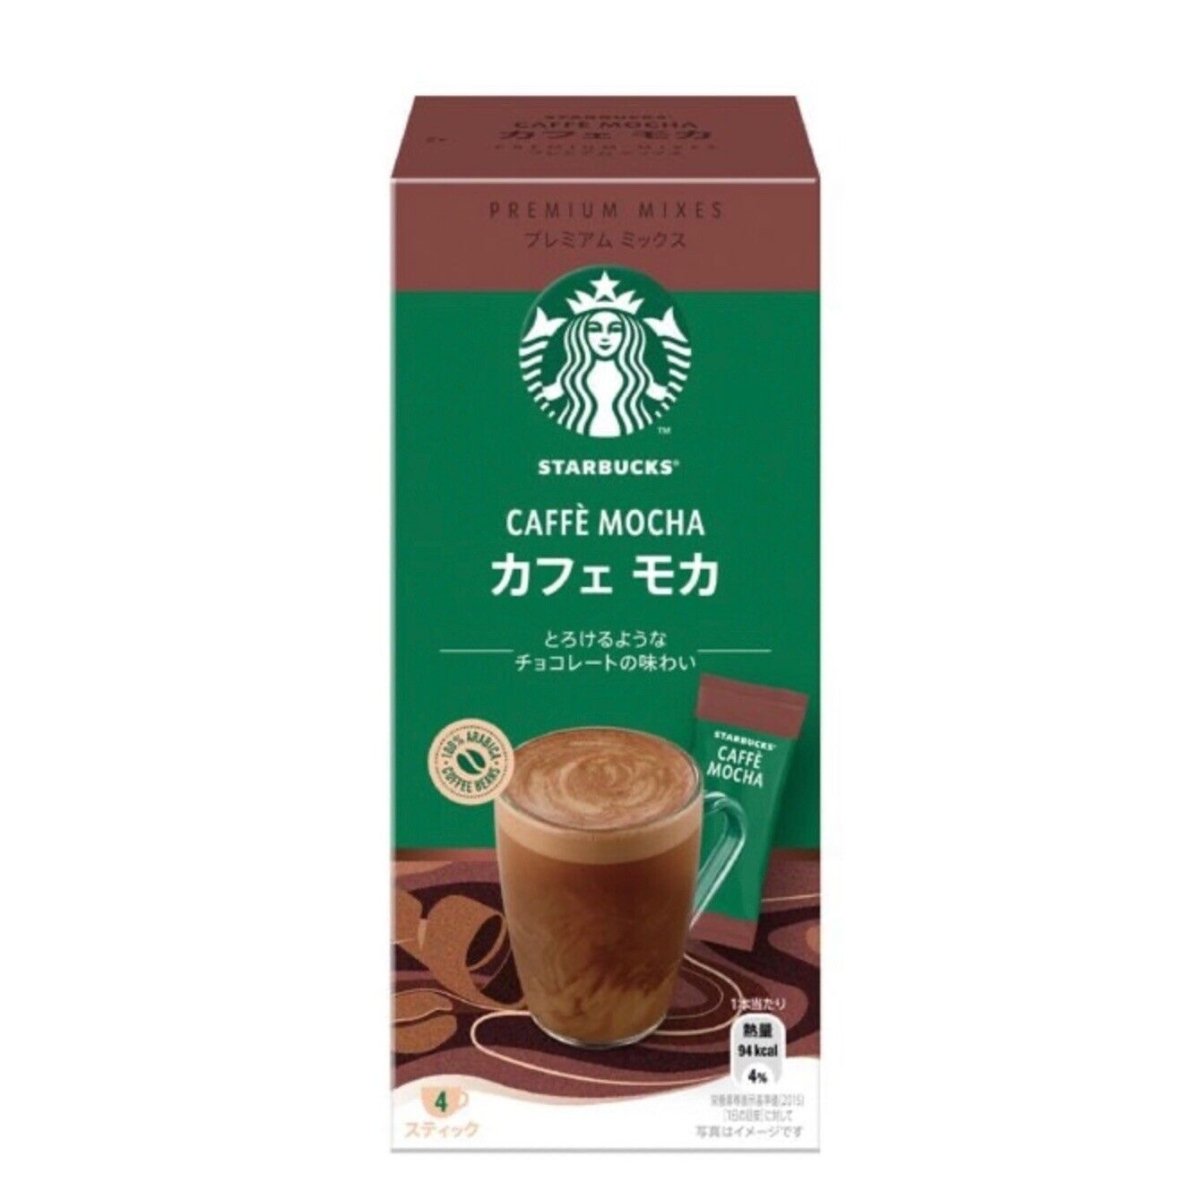 Starbucks Premium Mix Cafe Mocha Sticks (Japan) - Candy Mail UK